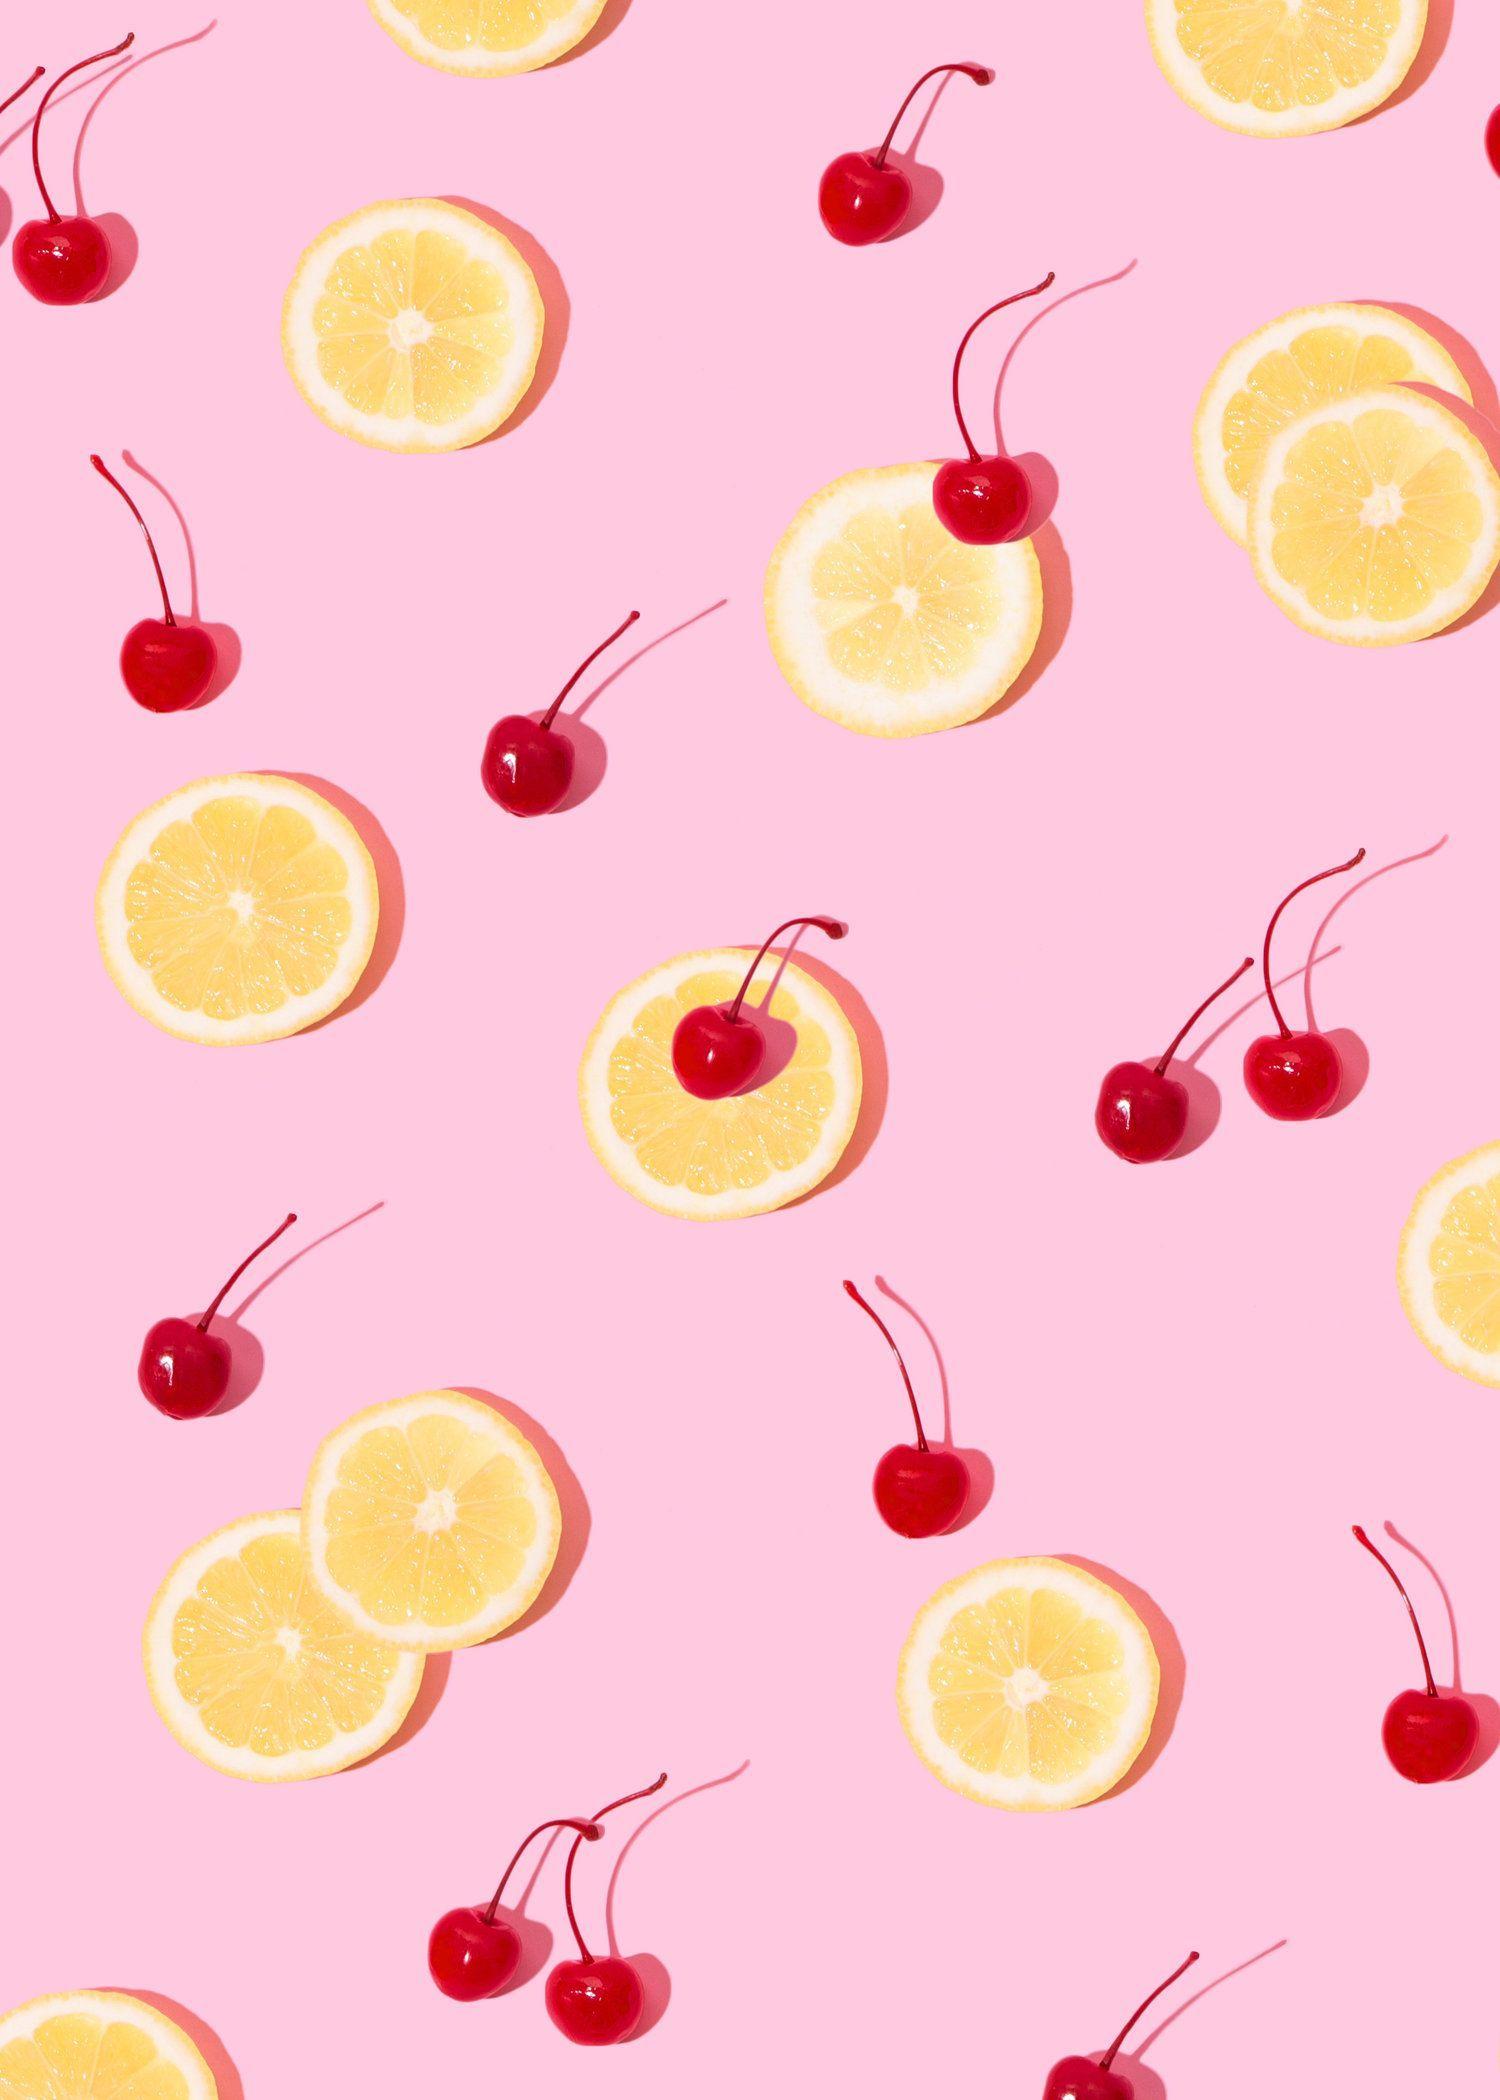 Cherry Lemonade // Wallpaper Download. Cherry lemonade, Tinder